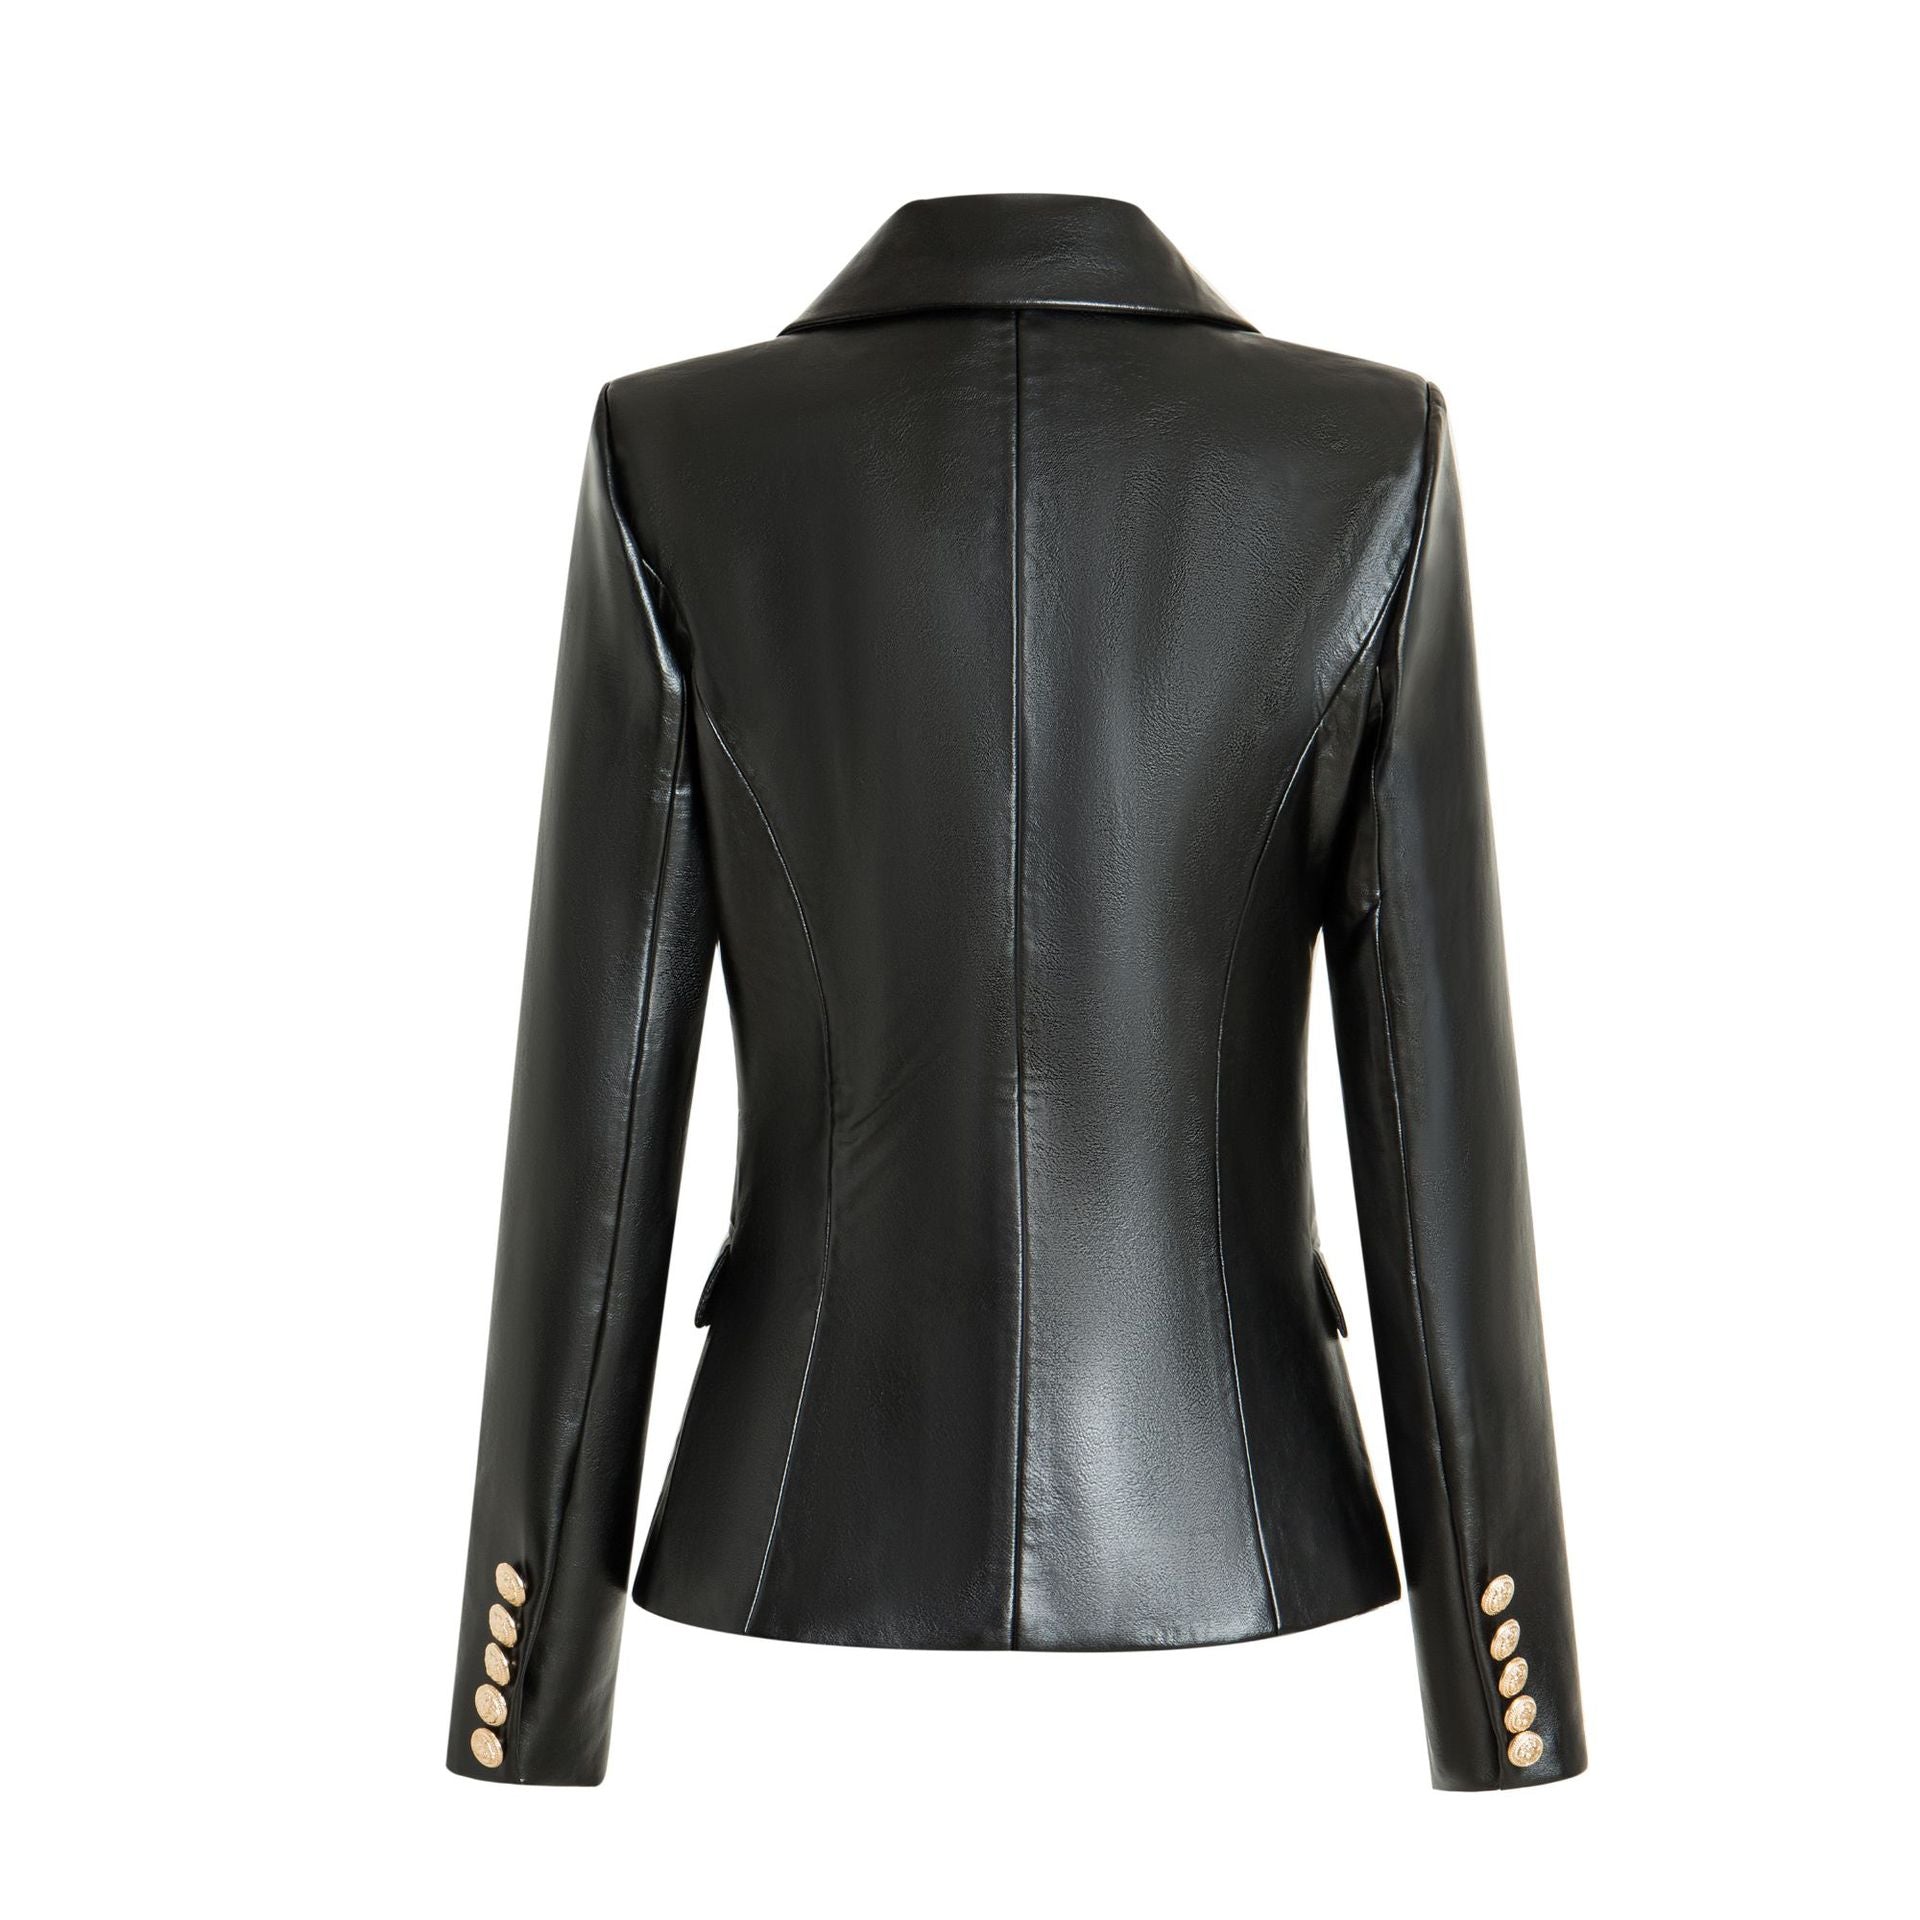 HarleyFashion European American Top Quality PU Leather Fittness Gold Buttons Slim High Street Women Black Blazer